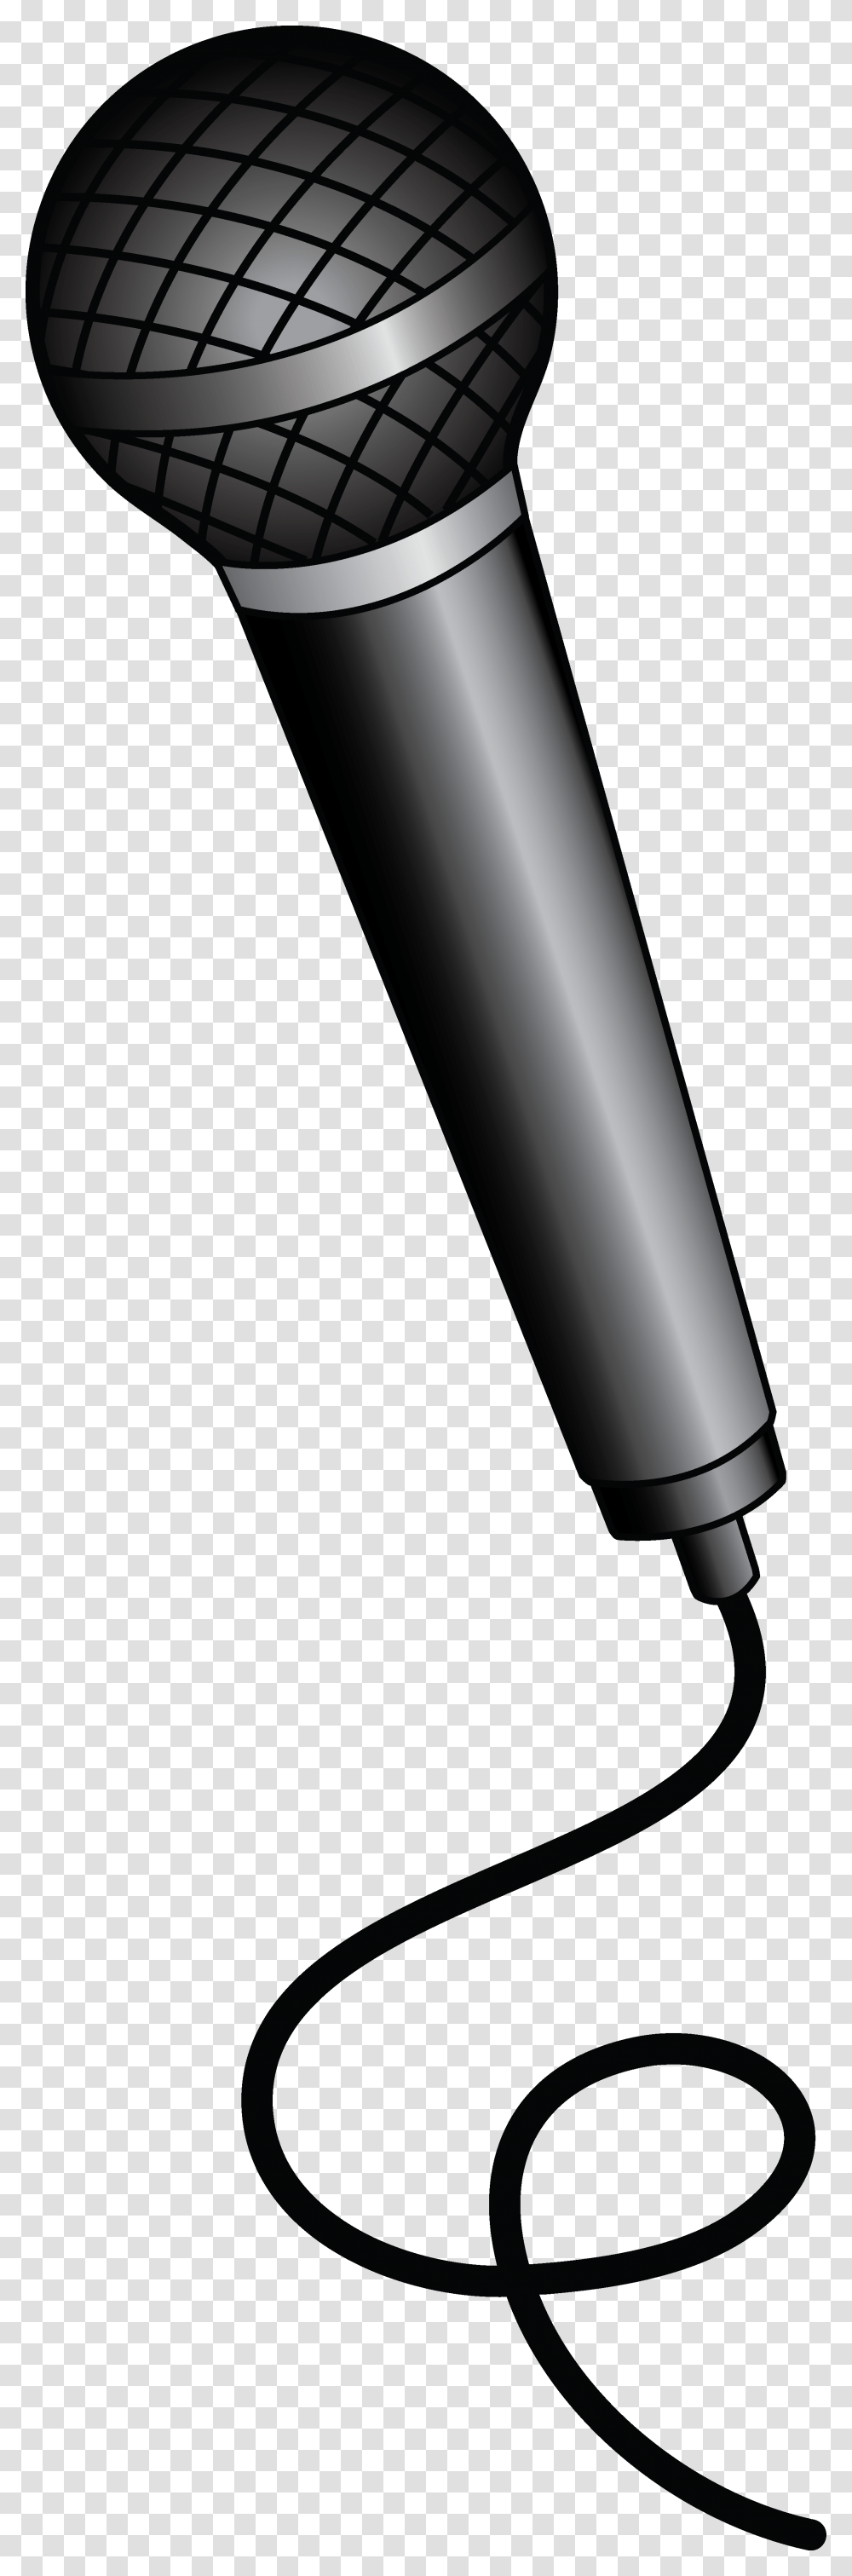 Microphone Clip Art 9i4bzbrie Microphone Clip Art, Electrical Device, Pen Transparent Png